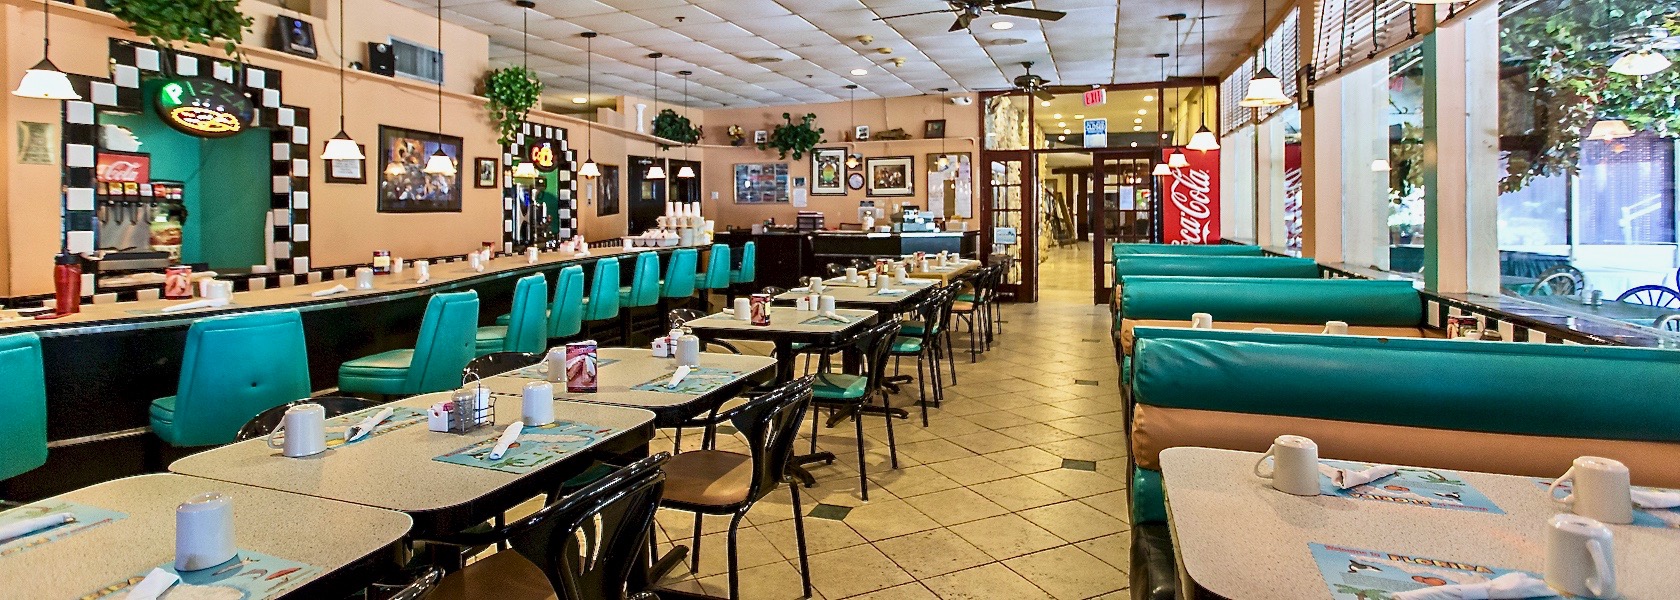 50s style diner inside the Days Hotel Thunderbird Beach Resort